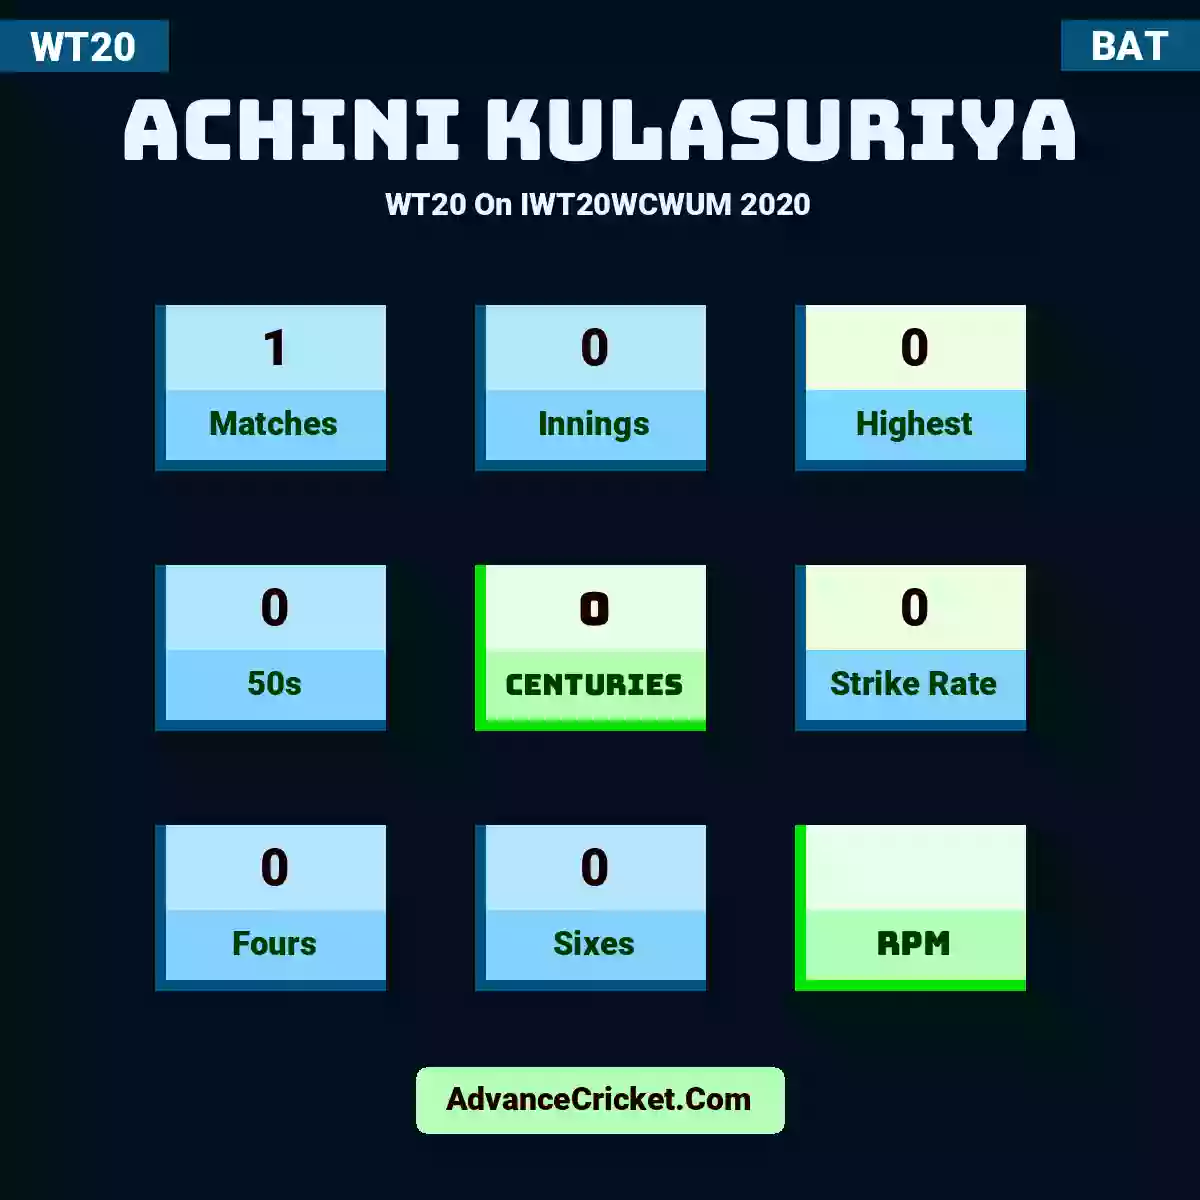 Achini Kulasuriya WT20  On IWT20WCWUM 2020, Achini Kulasuriya played 1 matches, scored 0 runs as highest, 0 half-centuries, and 0 centuries, with a strike rate of 0. A.Kulasuriya hit 0 fours and 0 sixes.